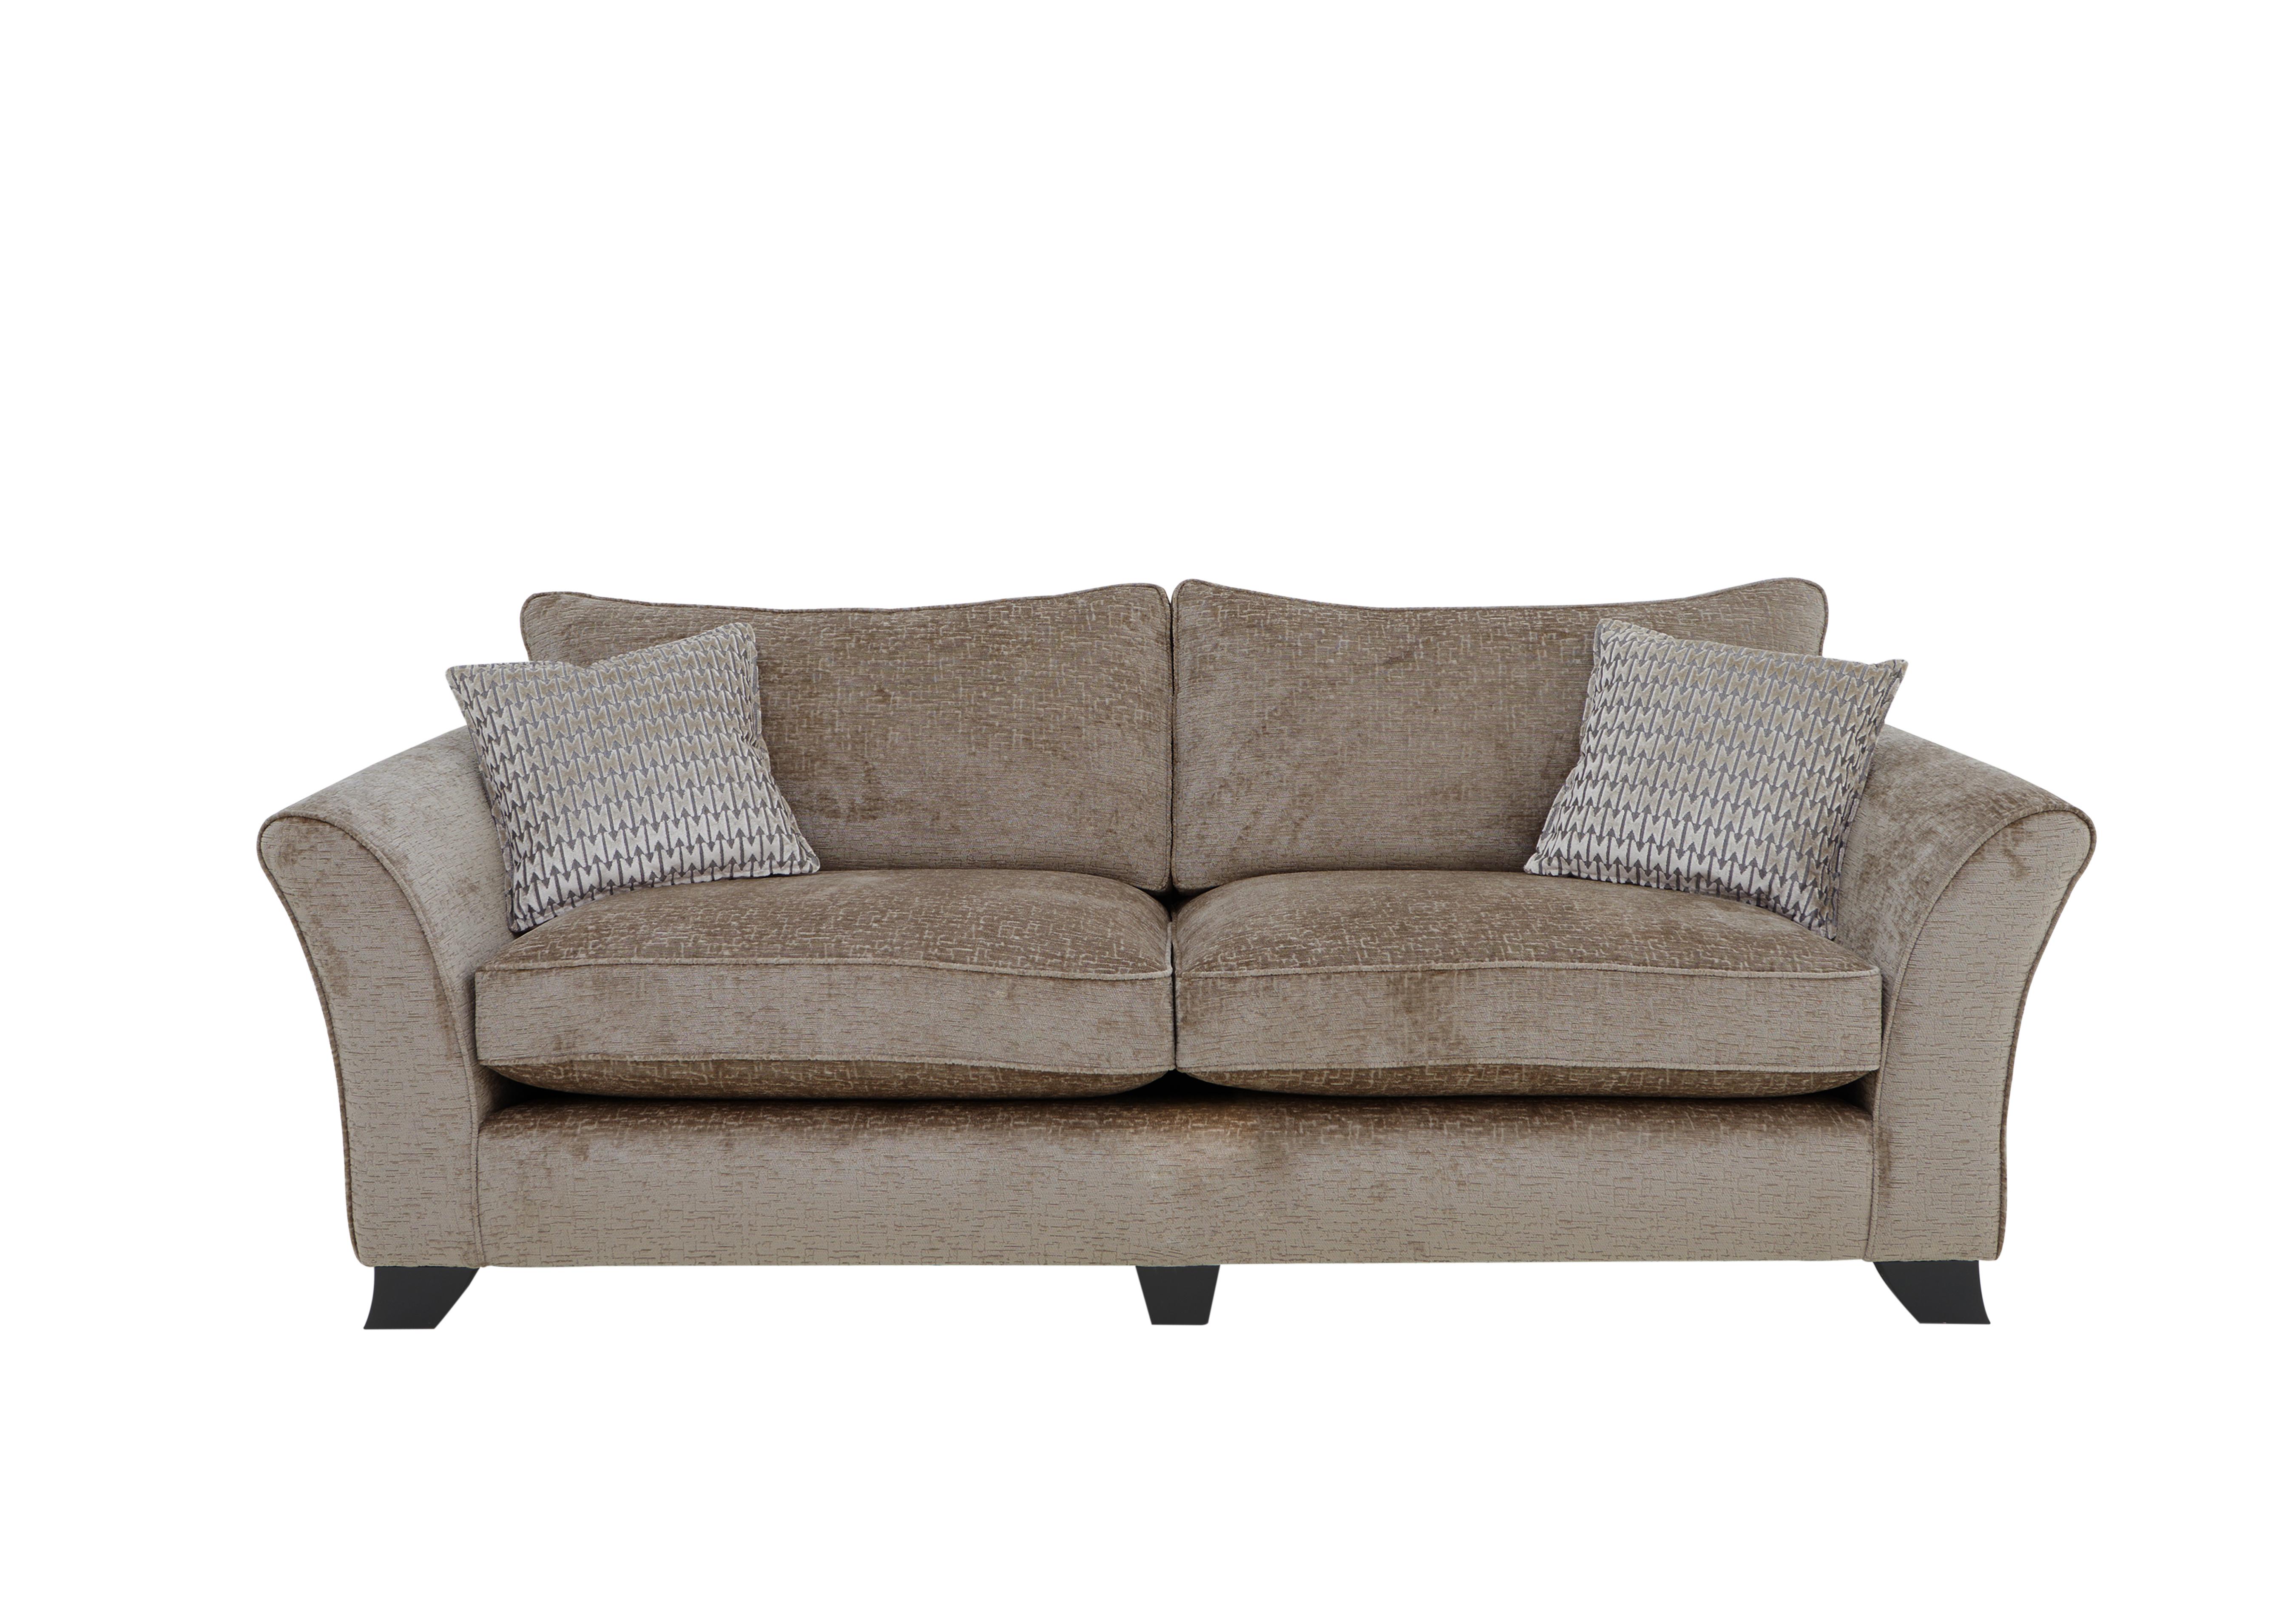 Sasha 4 Seater Classic Back Sofa in Alexandra Coco on Furniture Village